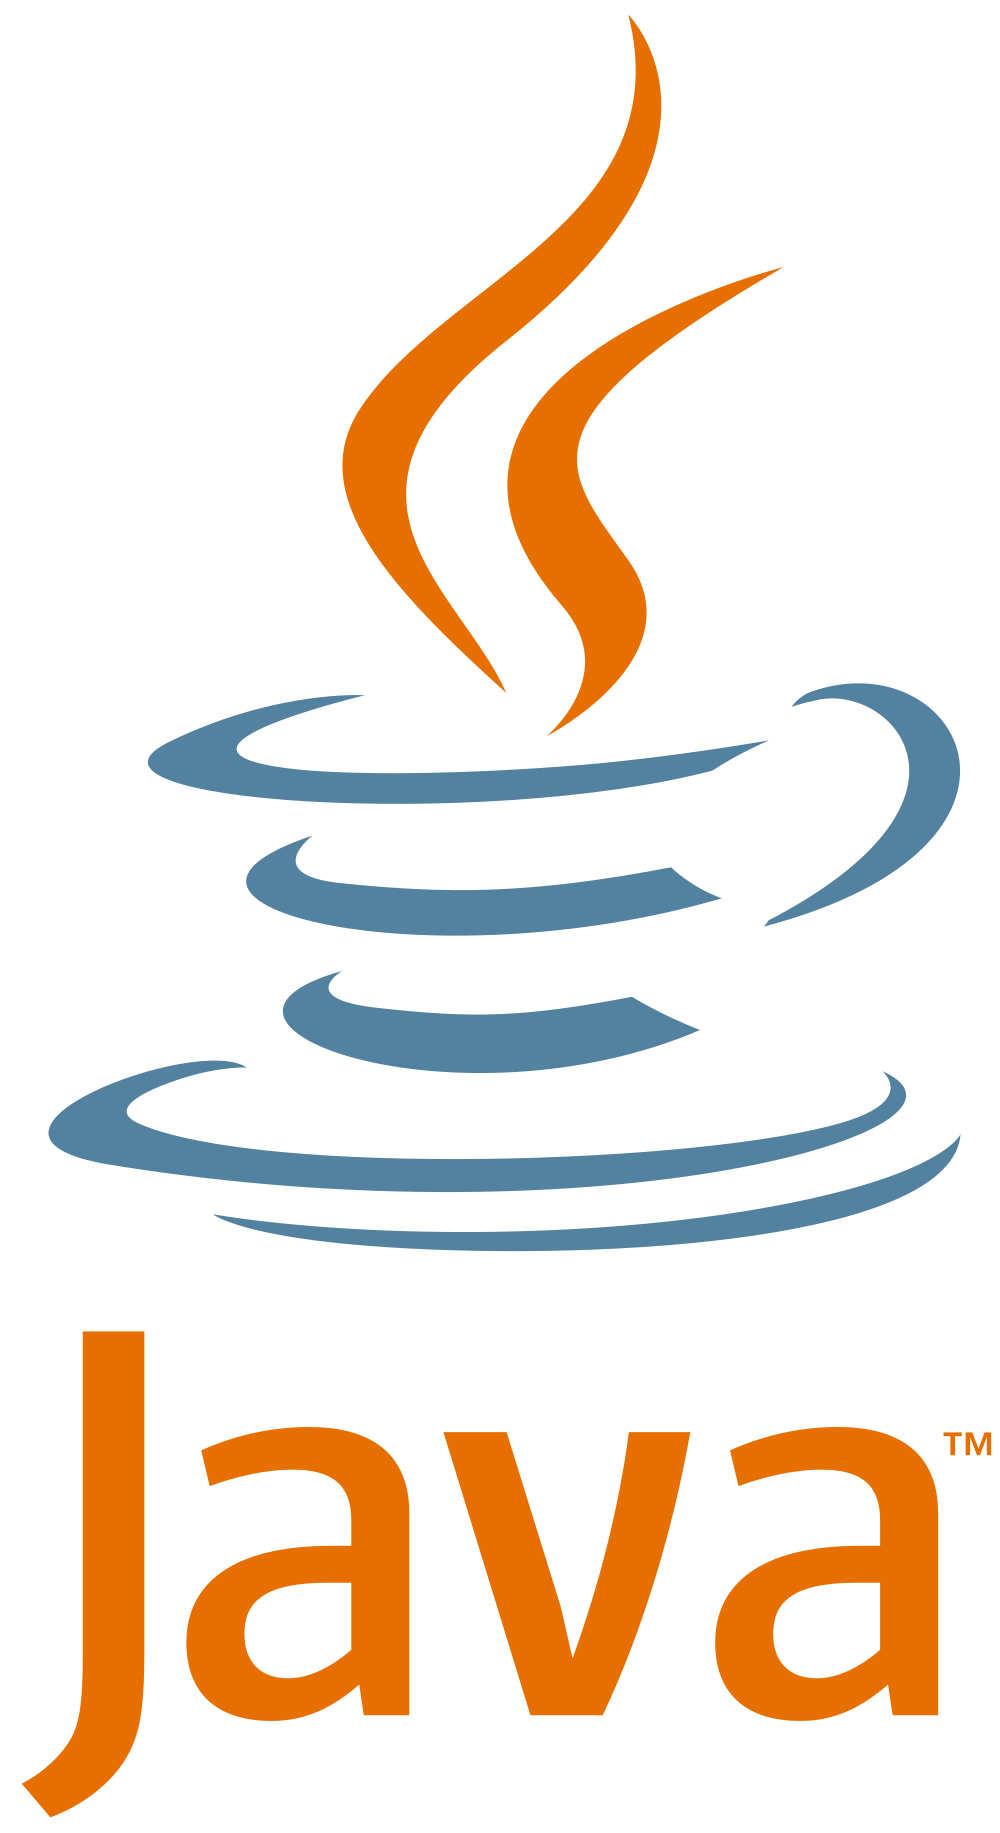 Java 7.0 free download